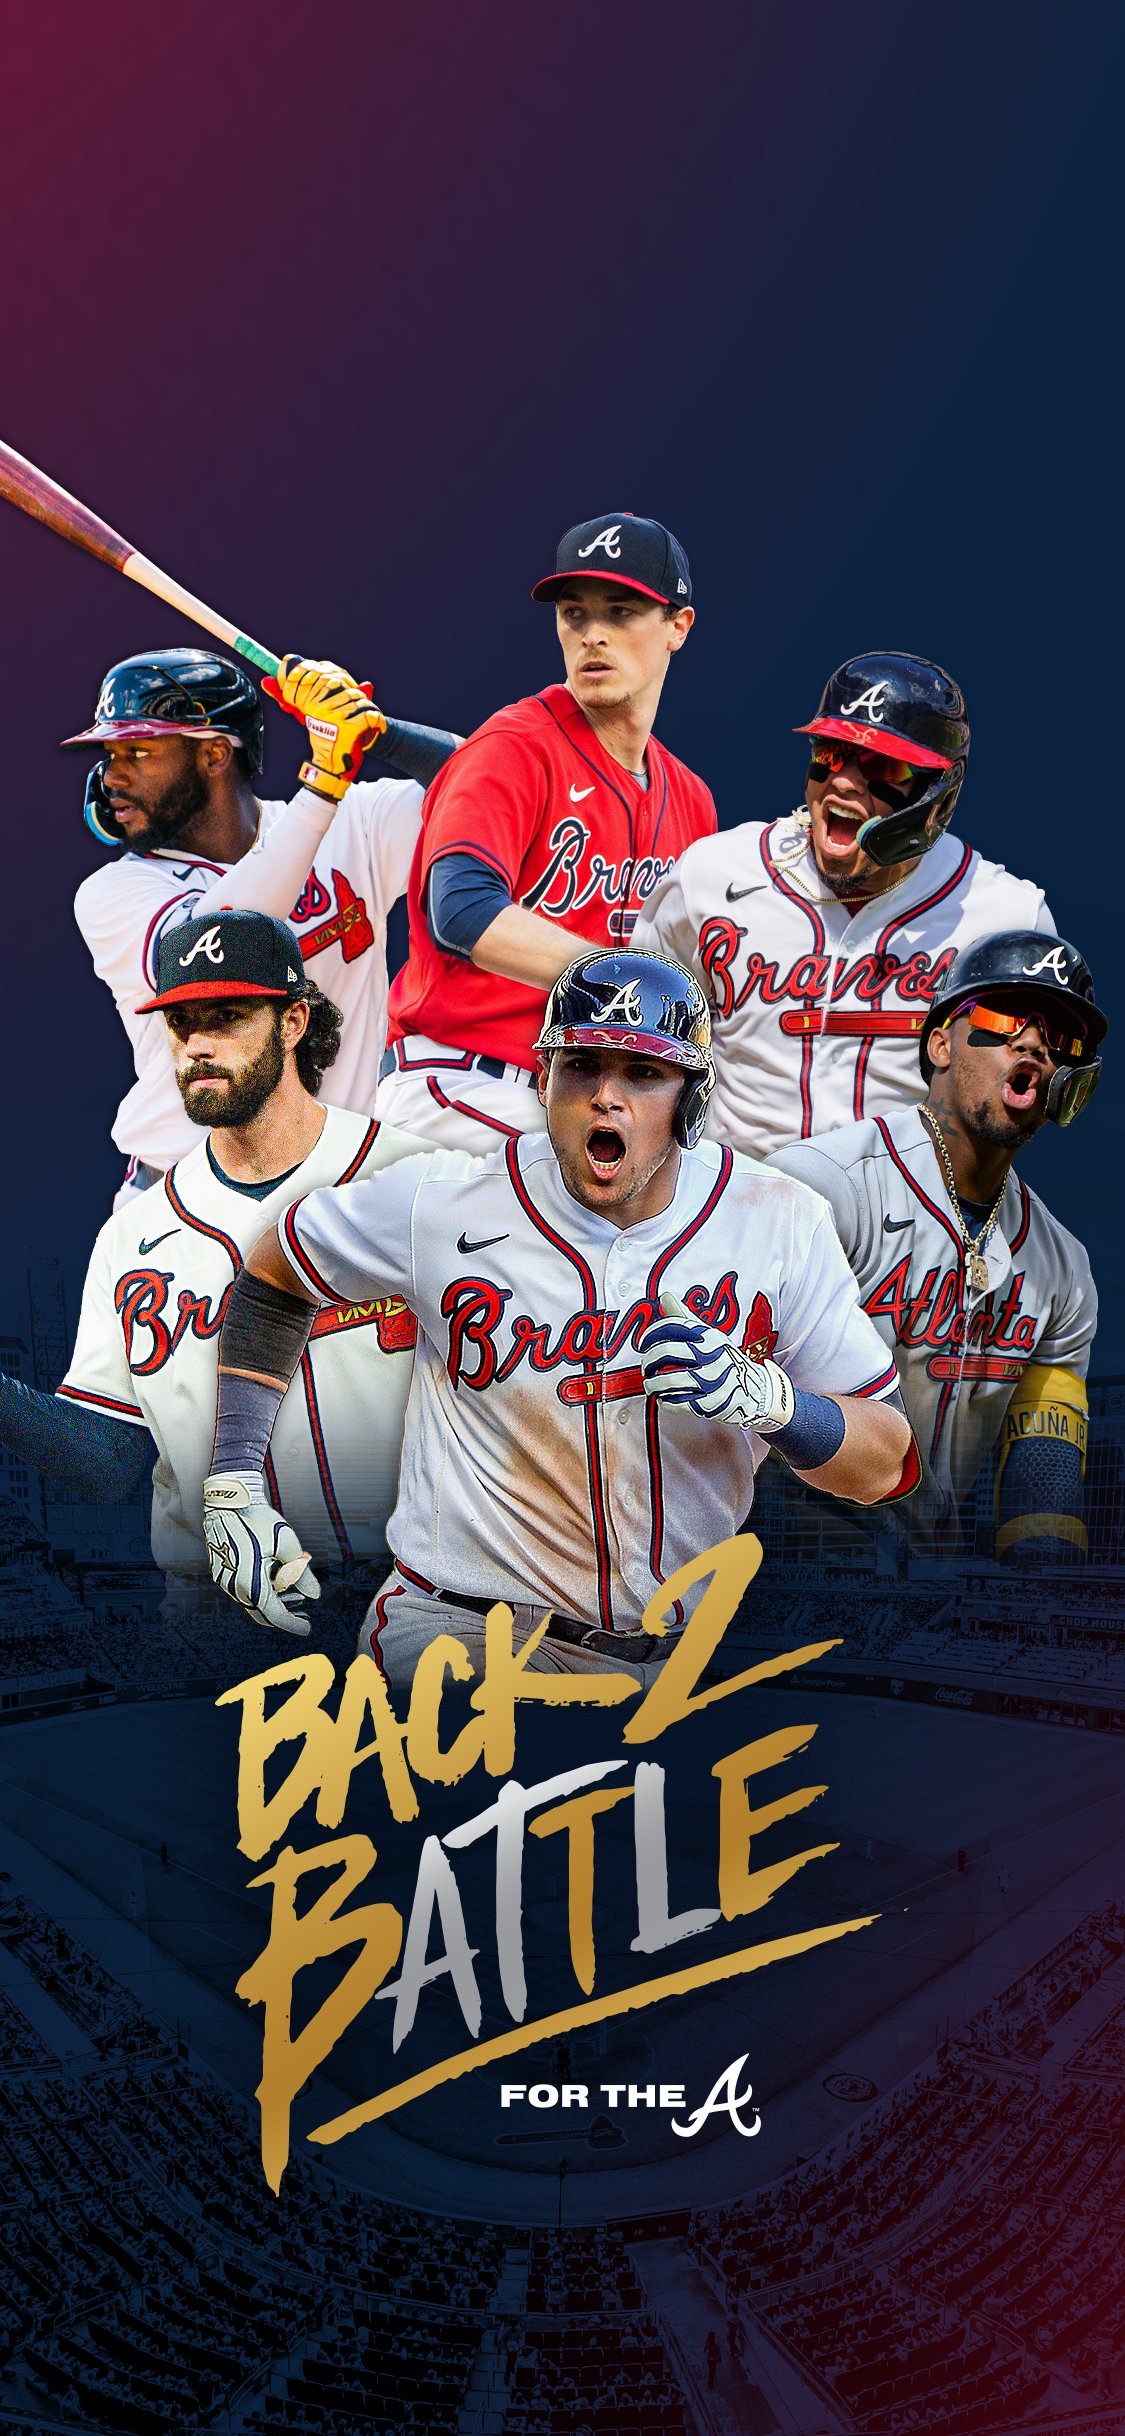 Atlanta Braves wallpaper